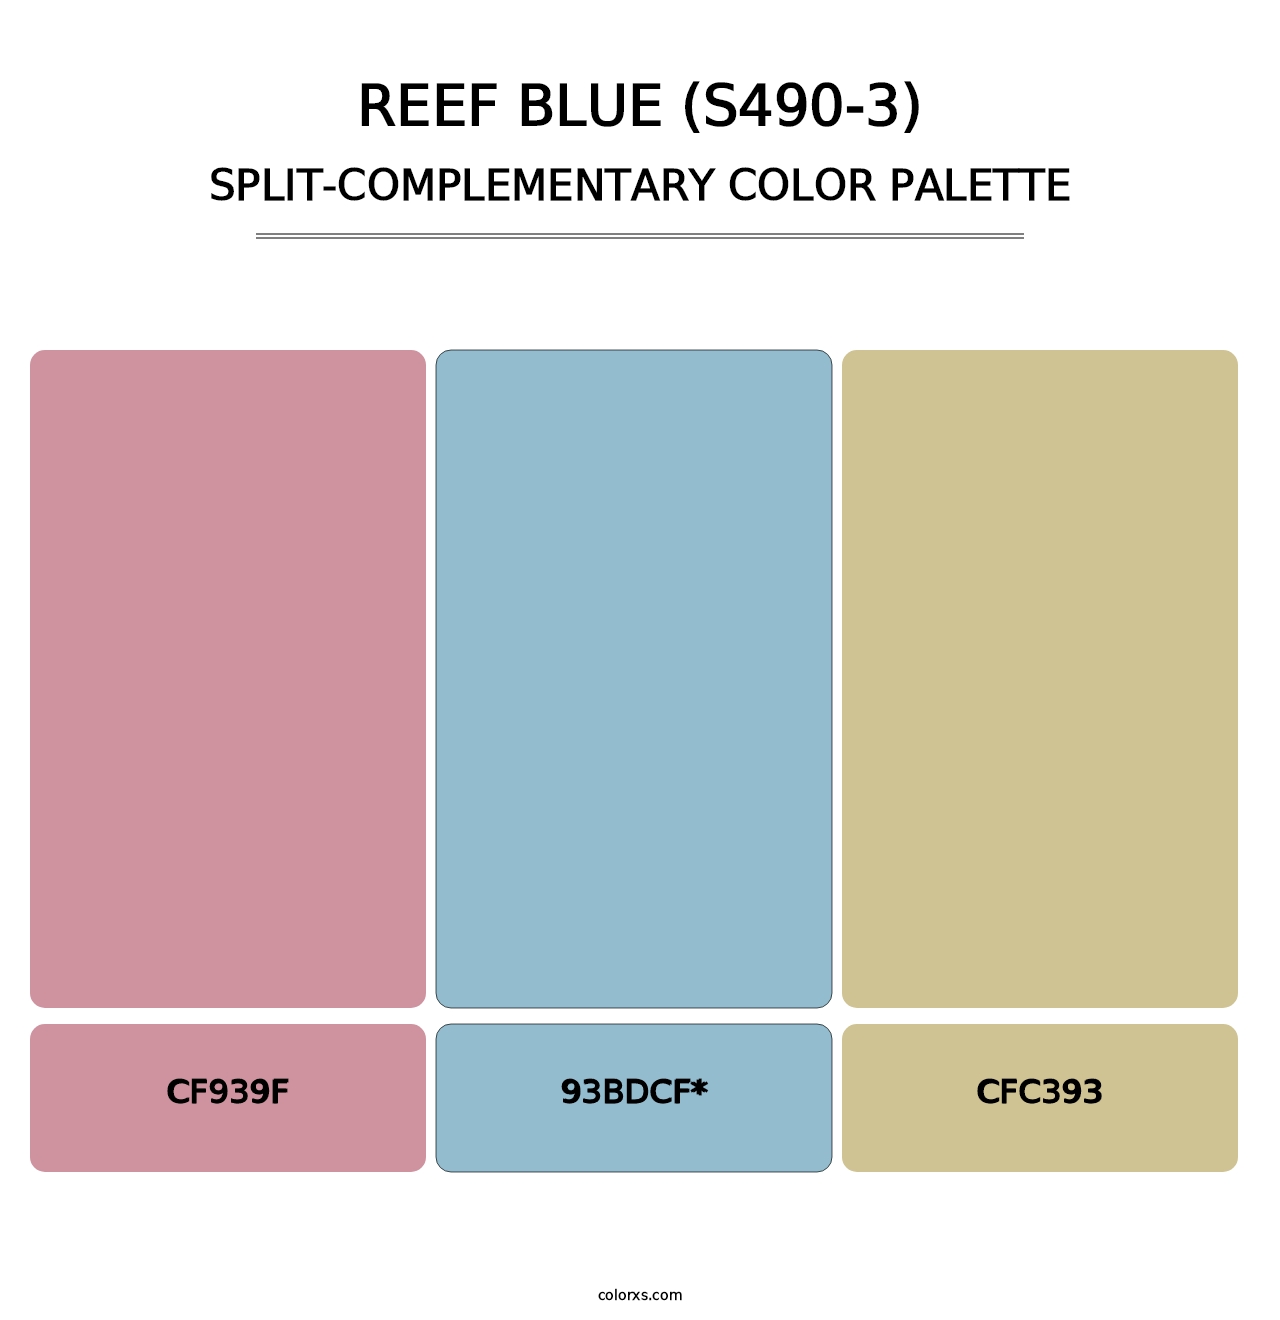 Reef Blue (S490-3) - Split-Complementary Color Palette